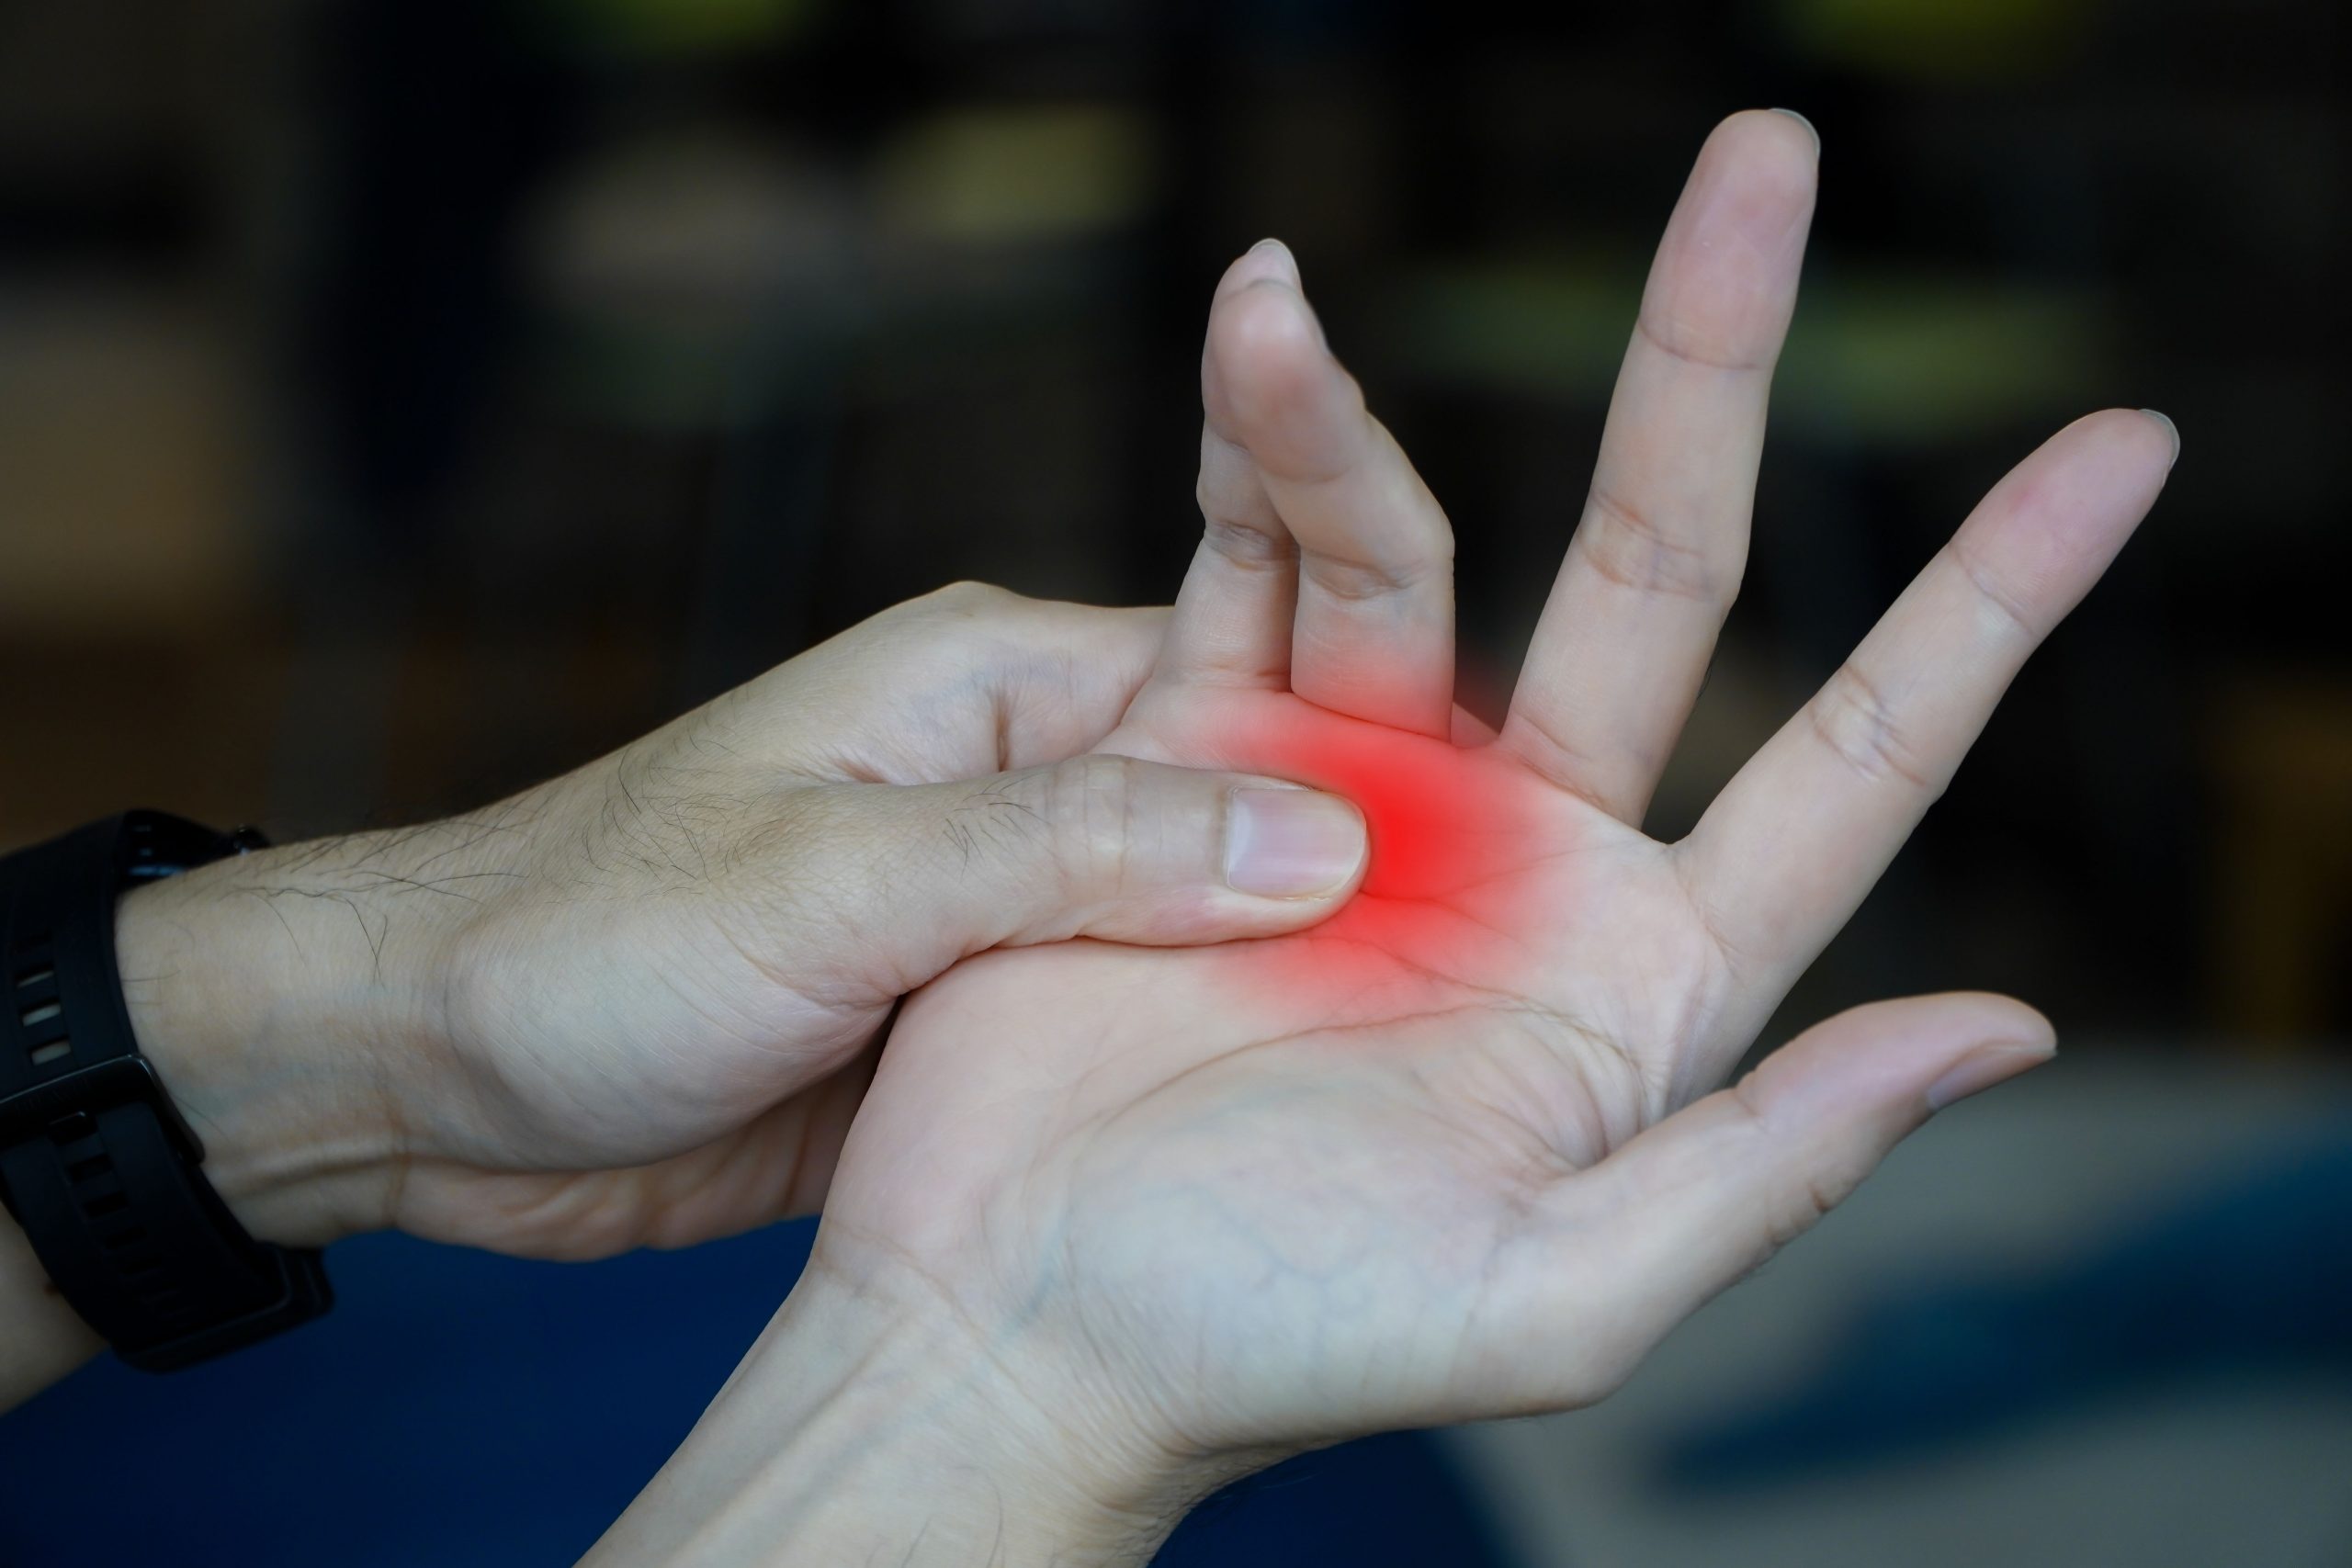 Treatment to Reverse Arterial Blockages in Rheumatoid Arthritis